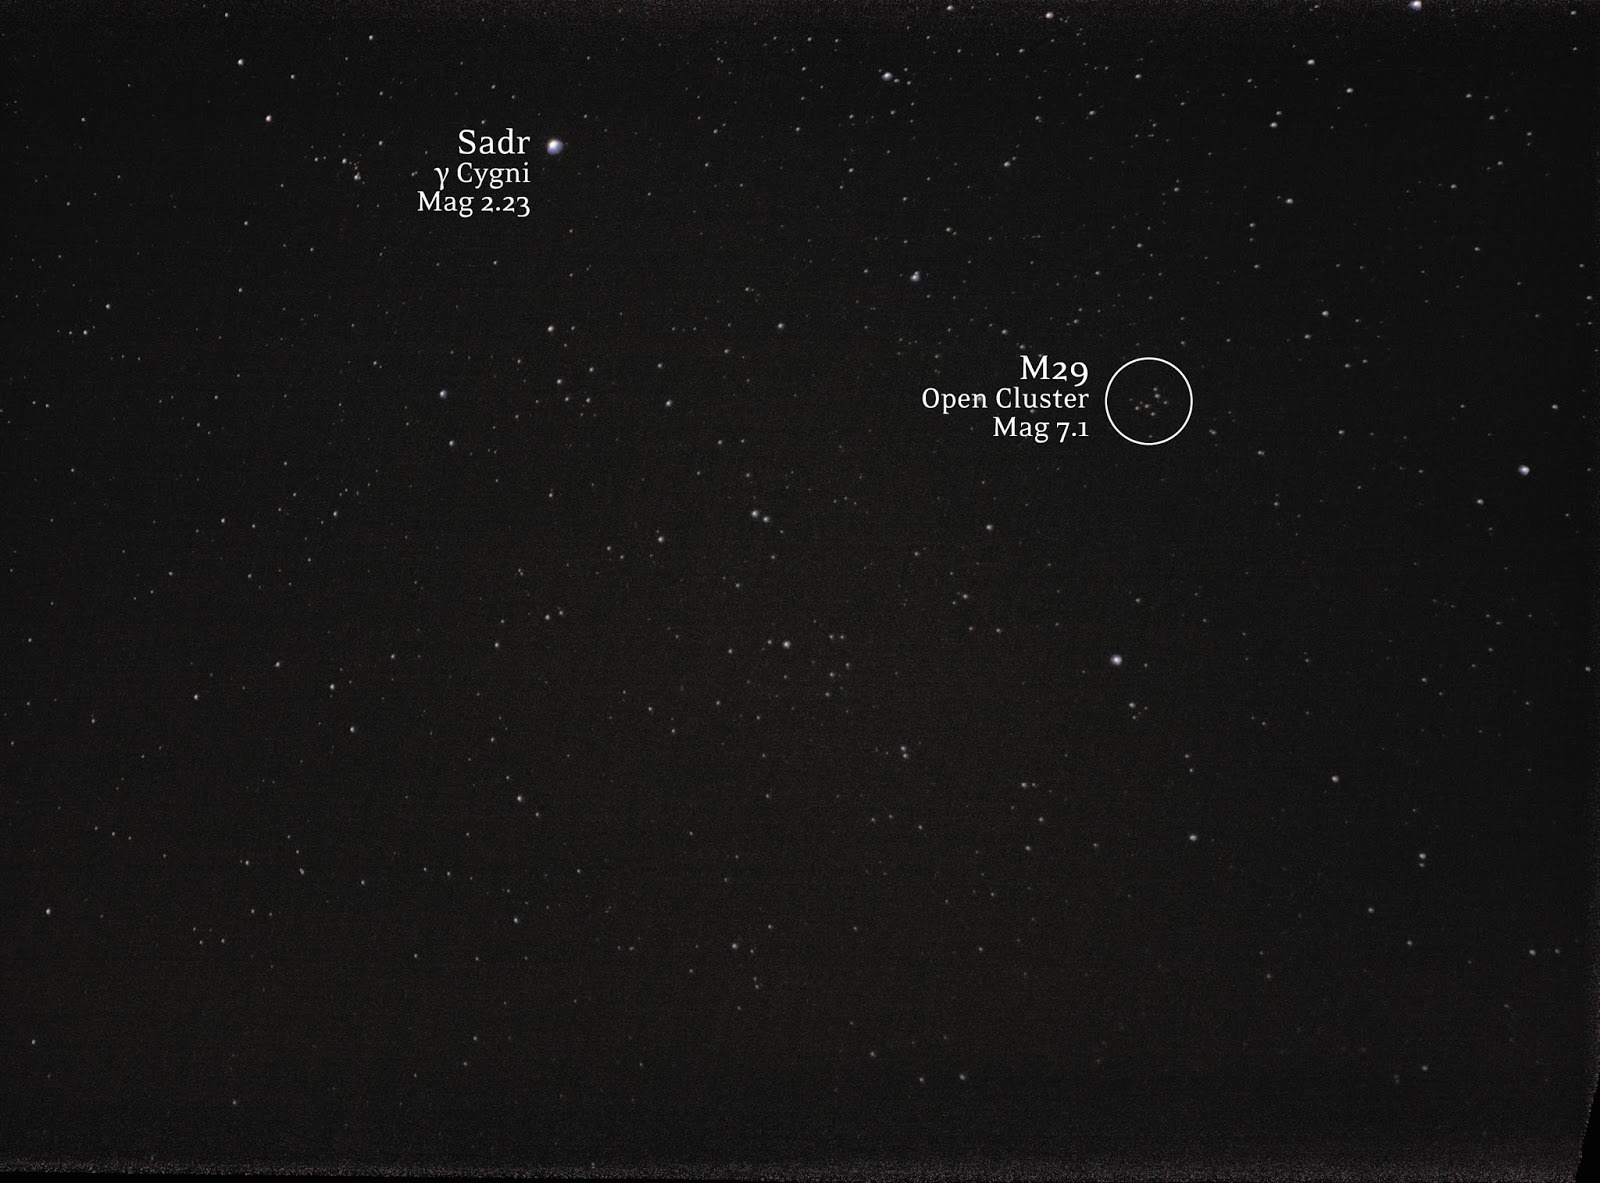 M29 With Sadr As An Anchor Star Stellar Neophyte Astronomy Blog